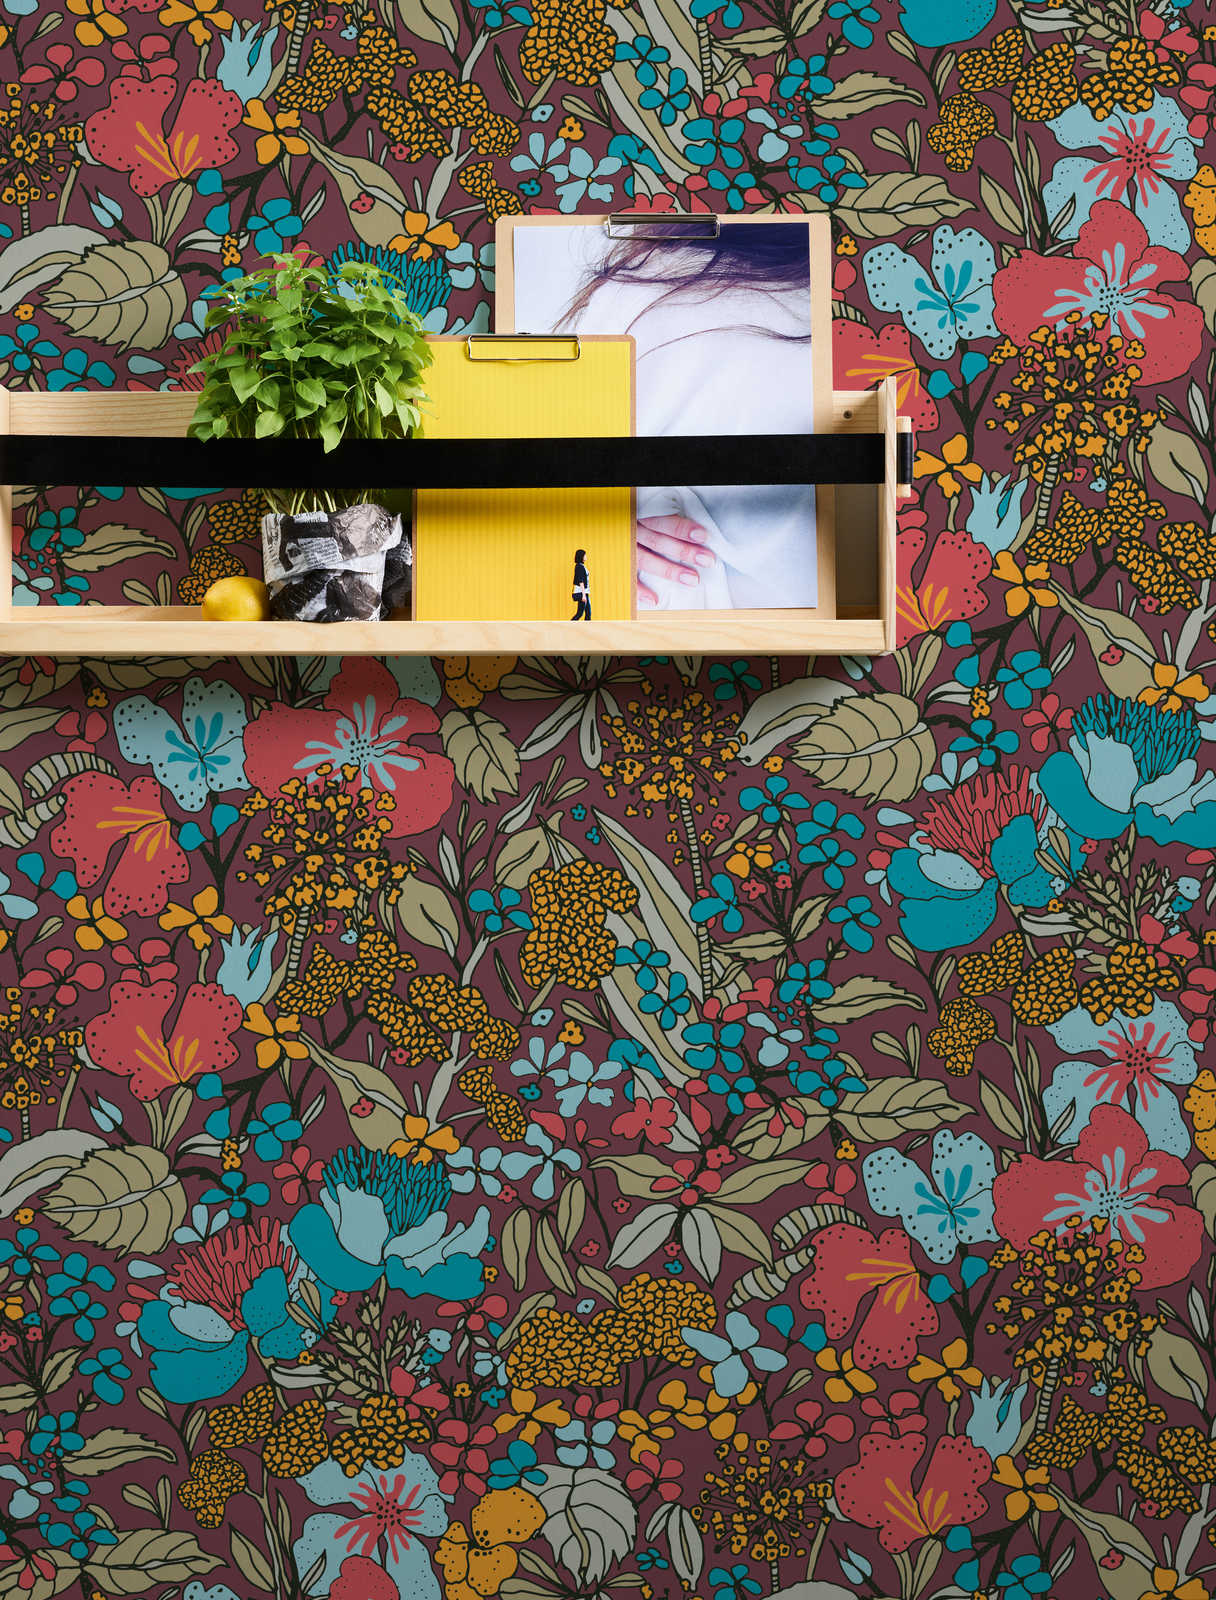             Blumen Tapete Violett im 70er Retro Design – Rot, Blau, Gelb
        